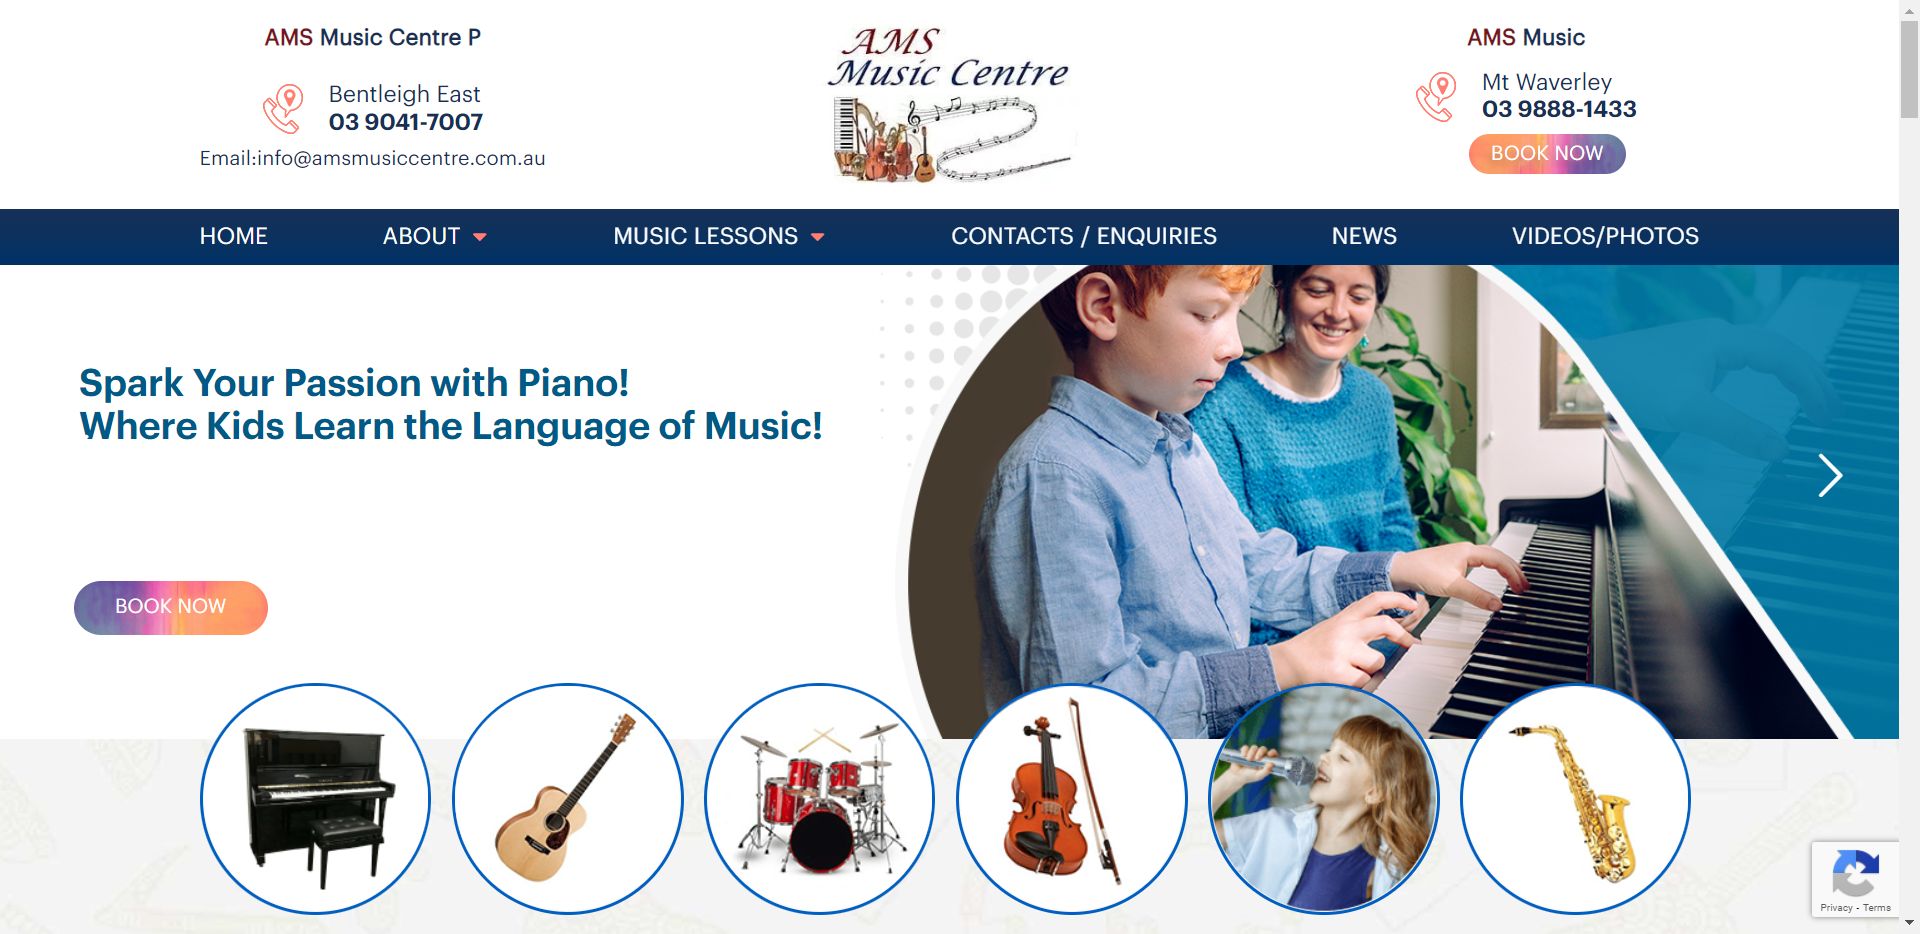 ams music centre